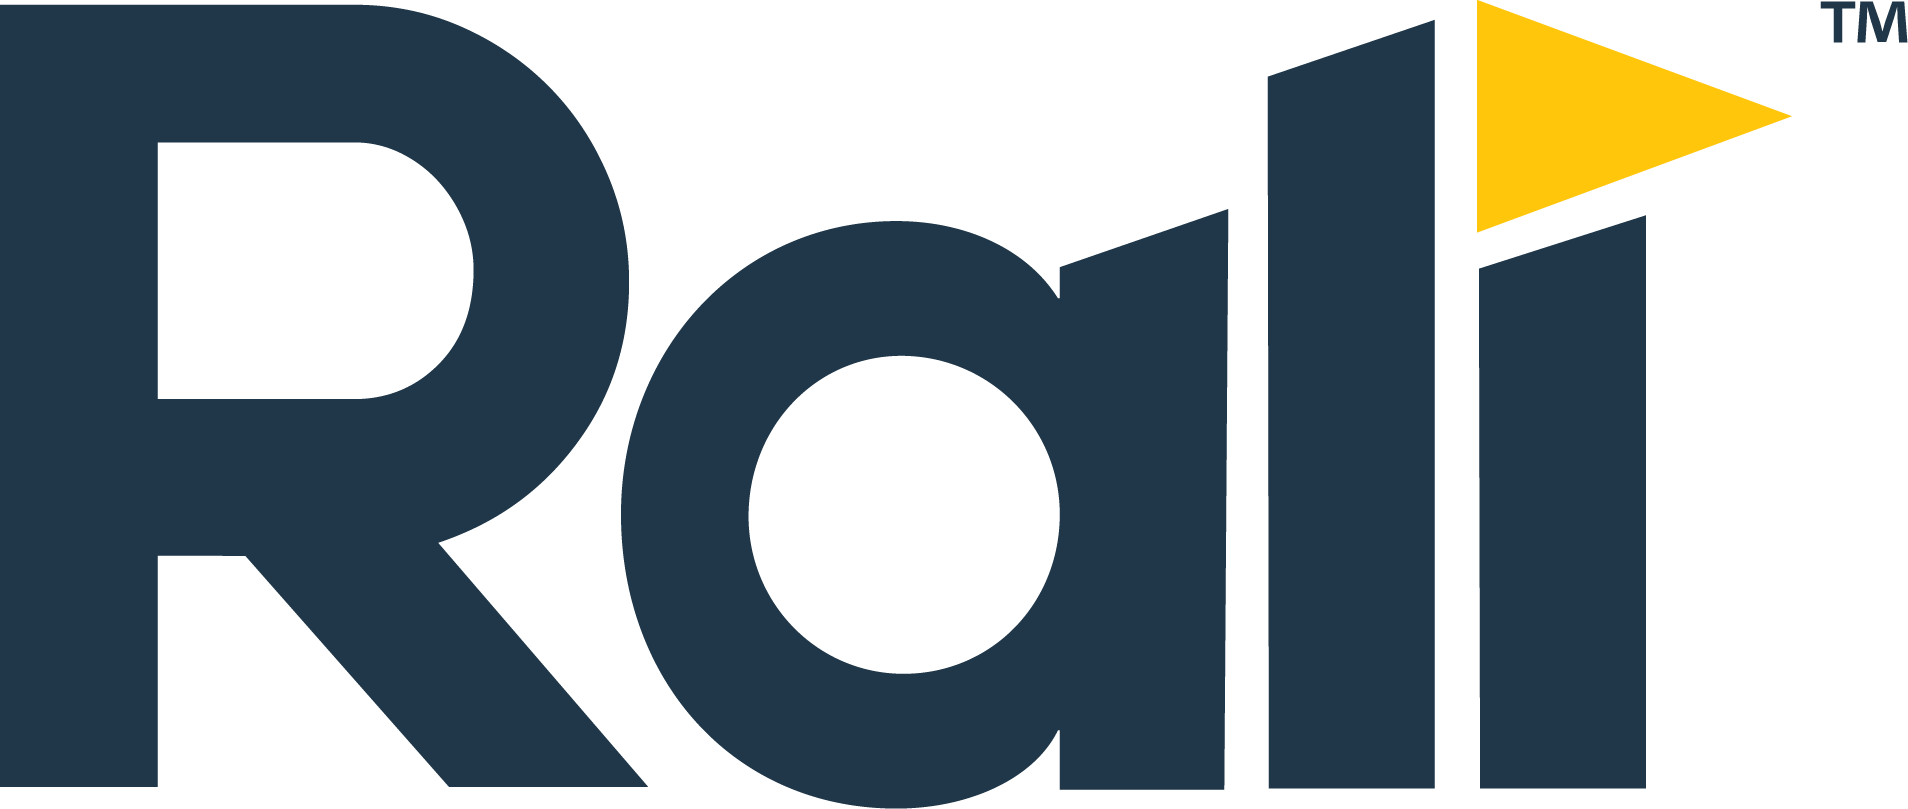 Rali logo